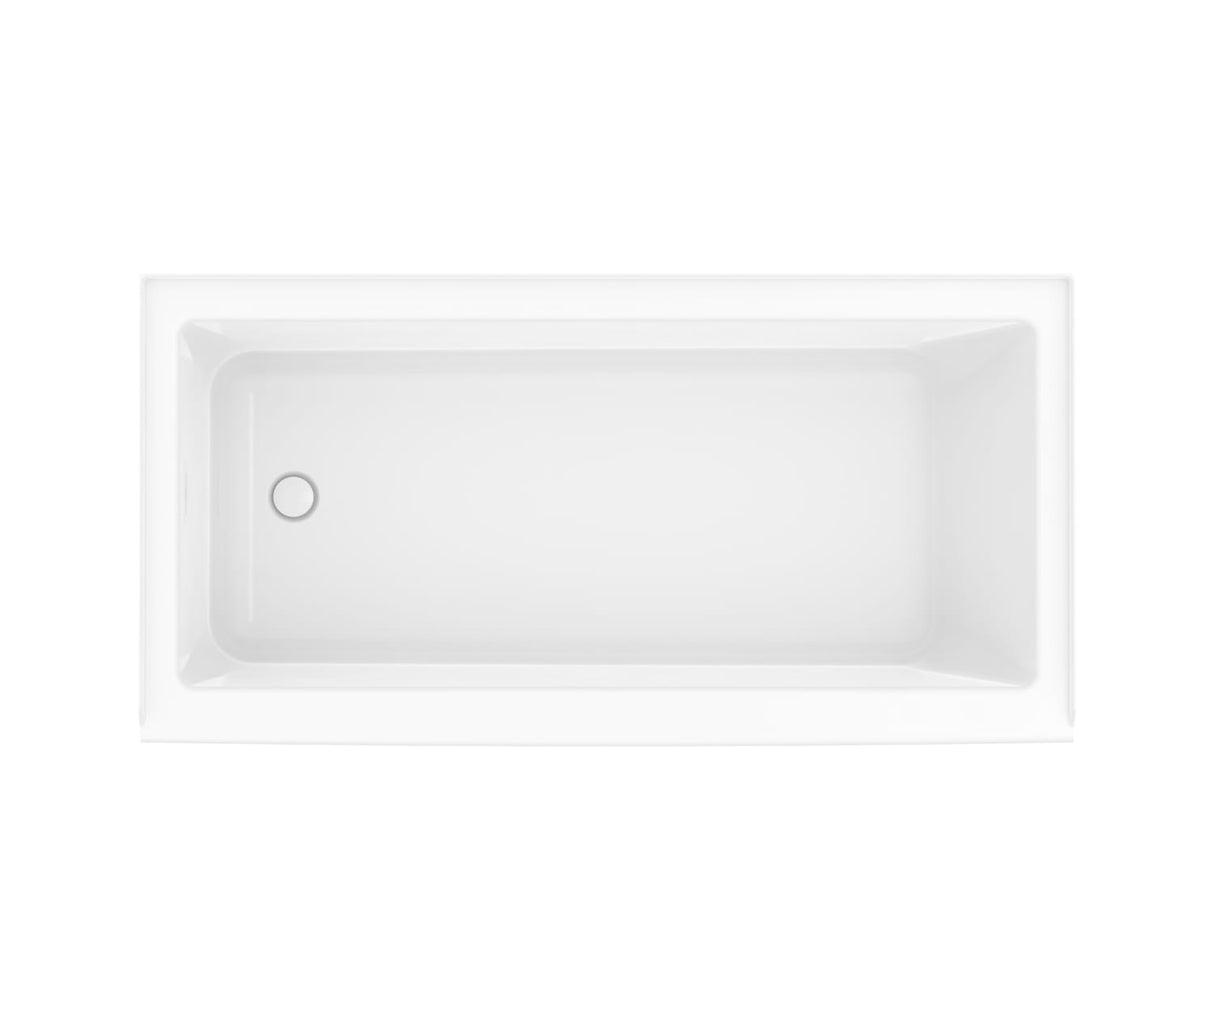 MAAX 106395-000-001-102 Bosca 6030 IFS AFR Acrylic Alcove Right-Hand Drain Bathtub in White